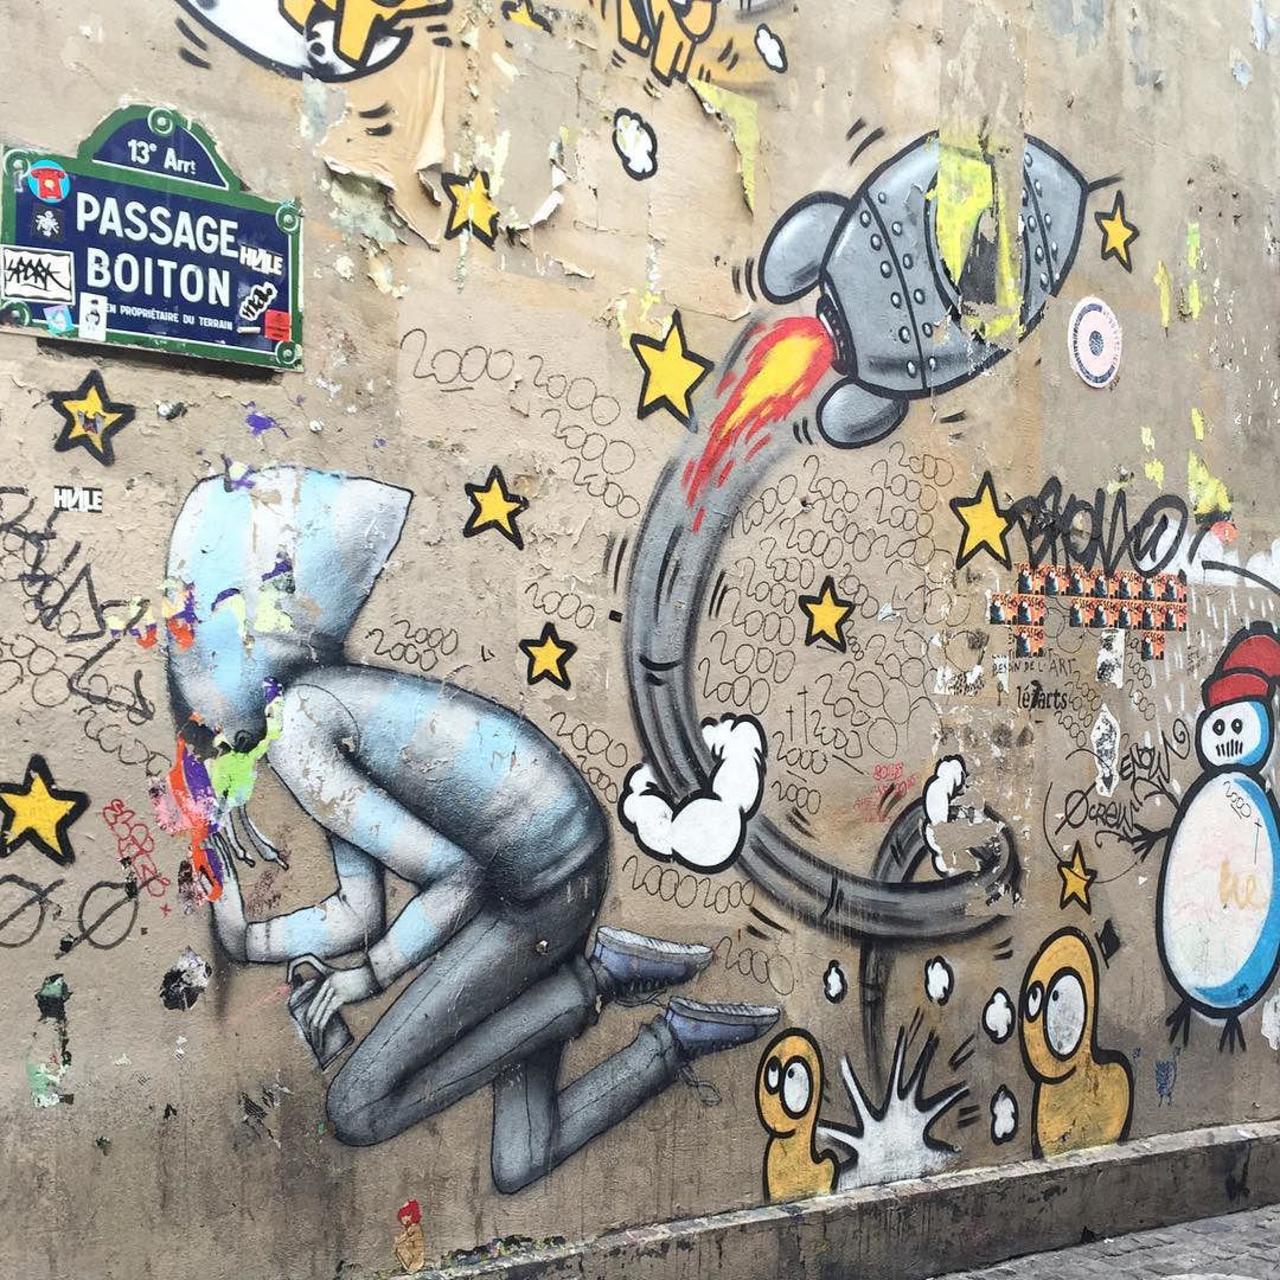 #Paris #graffiti photo by @catscoffeecreativity http://ift.tt/1ZFqtBE #StreetArt http://t.co/GE9i1uEmY5